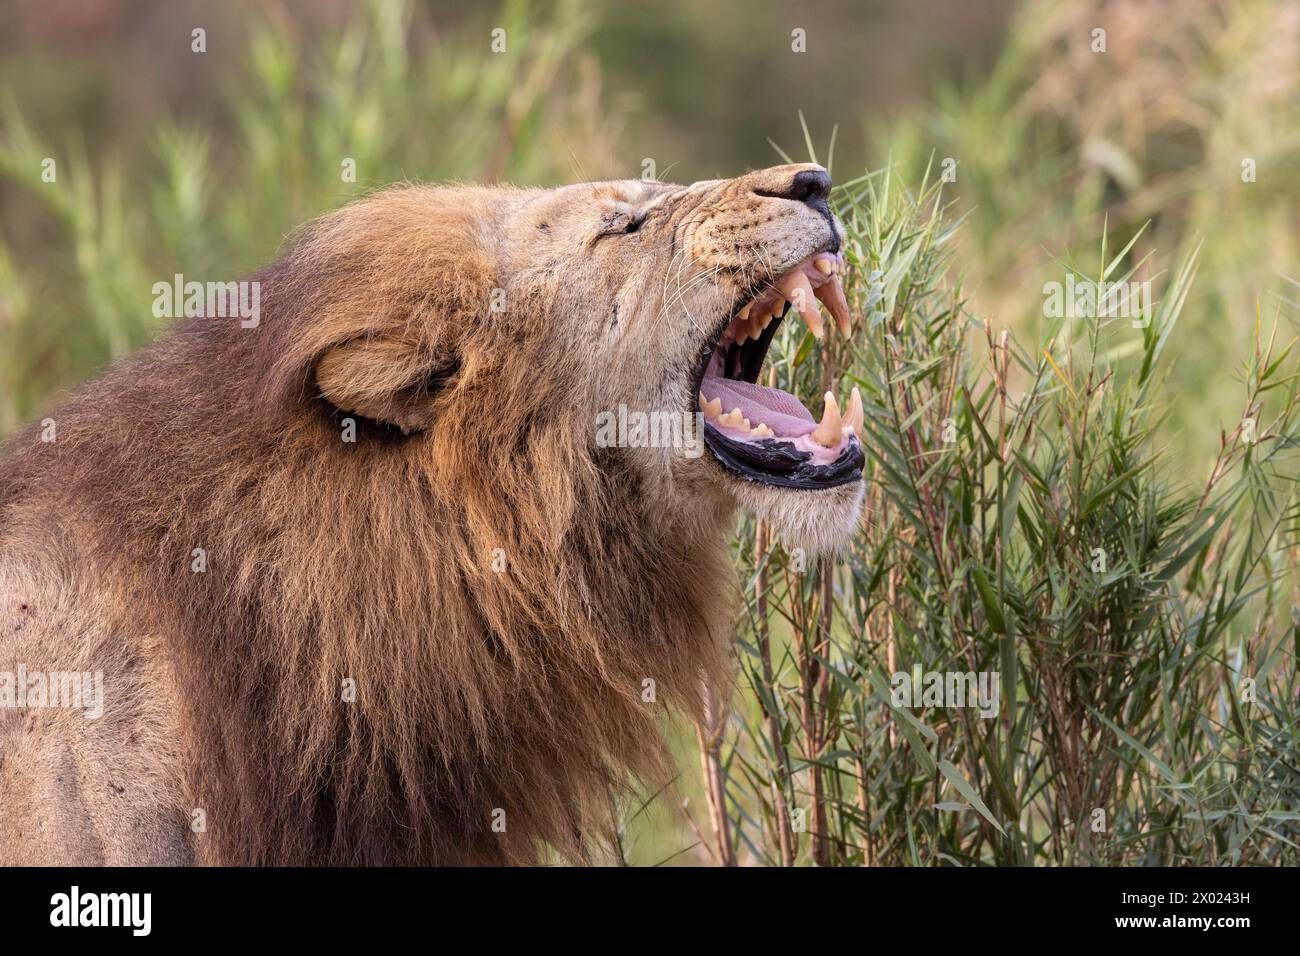 Lion (Panthera leo) zeigt Flehmen Antwort, Zimanga privates Wildreservat, KwaZulu-Natal, Südafrika Stockfoto